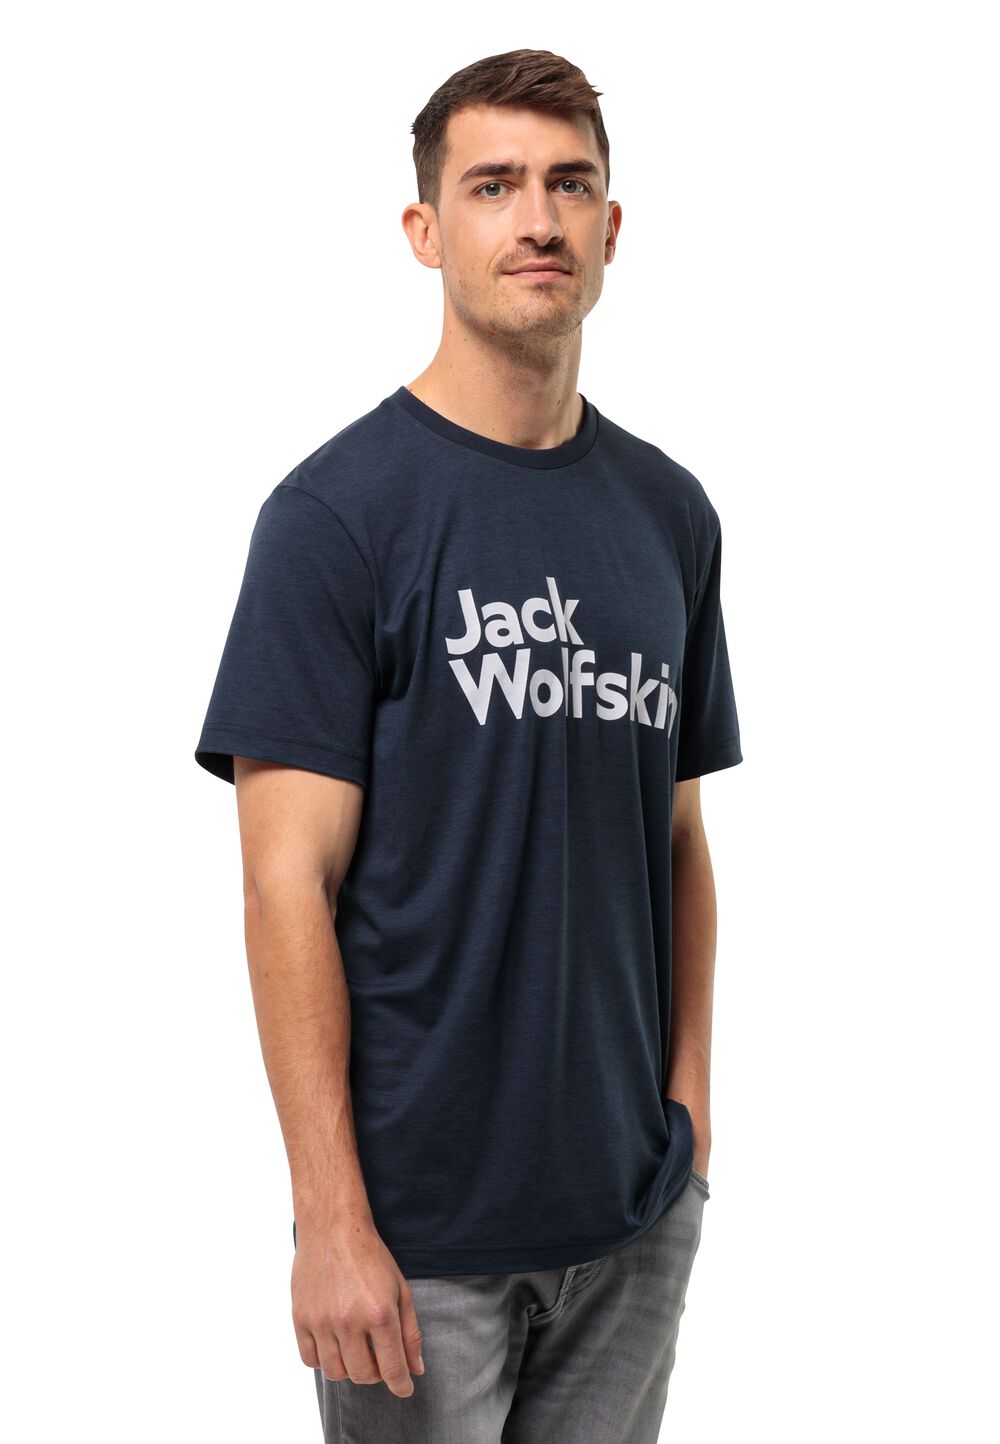 Jack Wolfskin Brand T-Shirt Men Functioneel shirt Heren S blue night blue